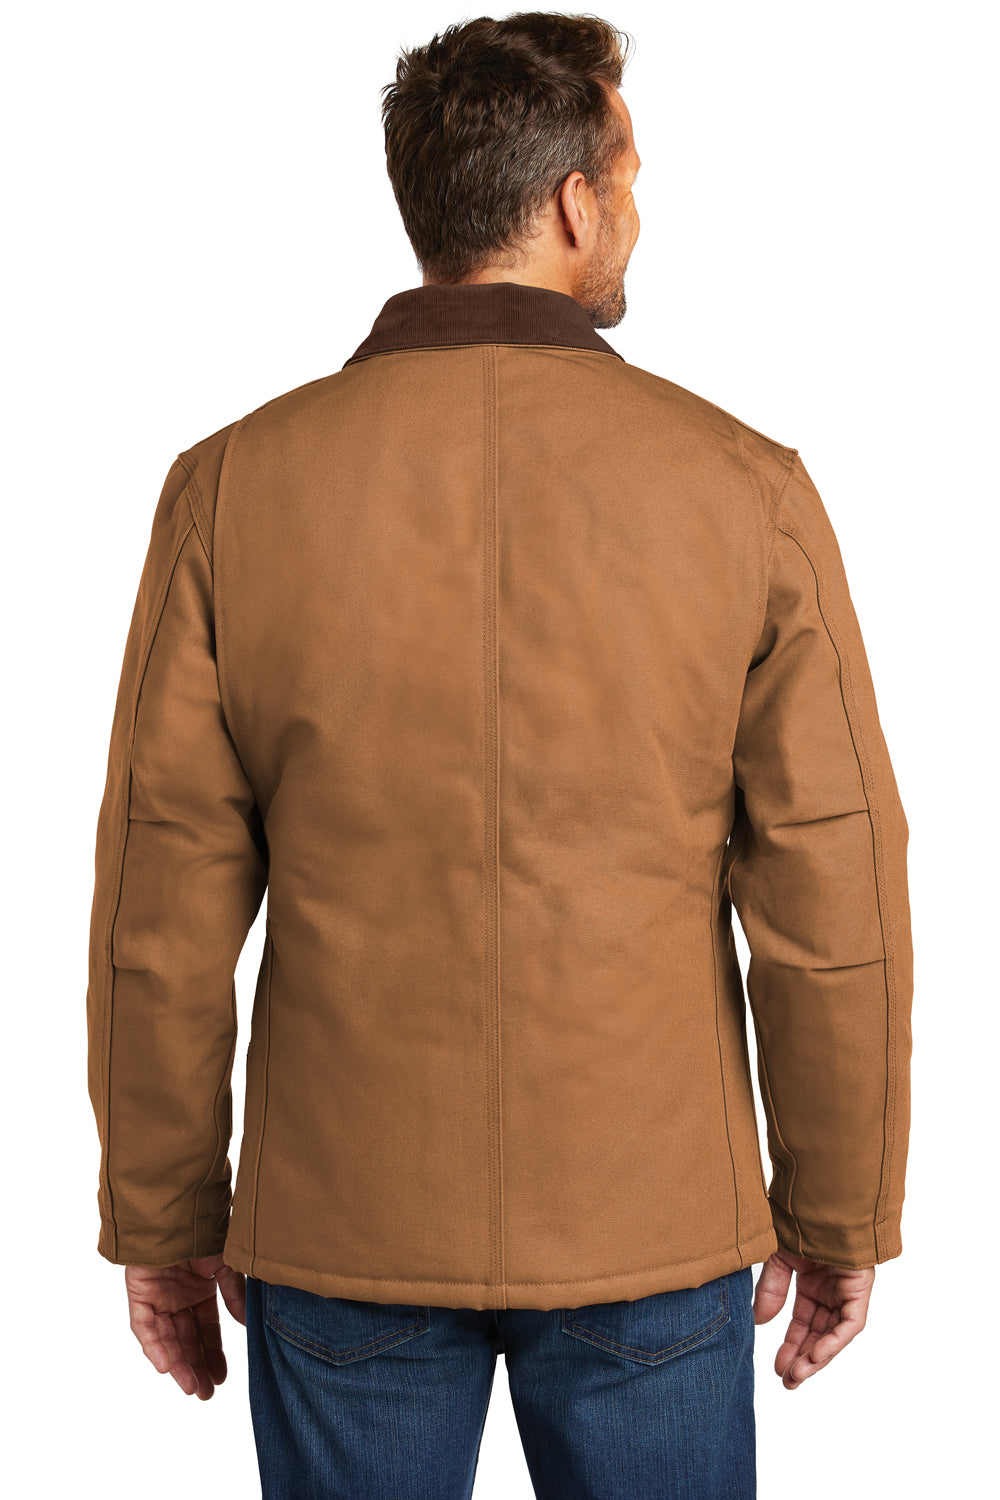 Carhartt CTC003/CTTC003 Mens Wind & Water Resistant Duck Cloth Full Zip Jacket Carhartt Brown Model Back